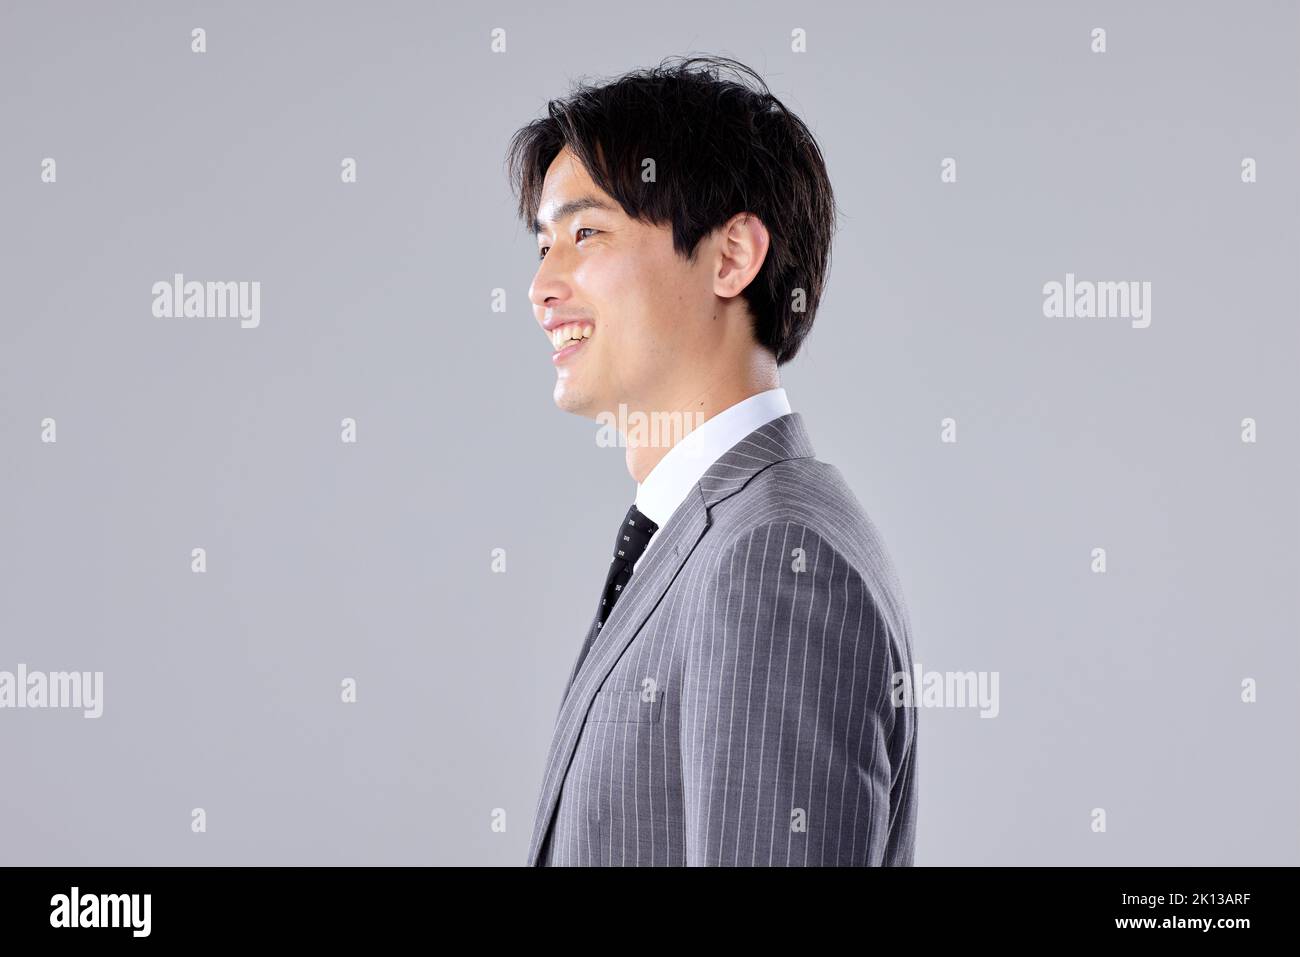 Japanese businessman studio portrait Stock Photo